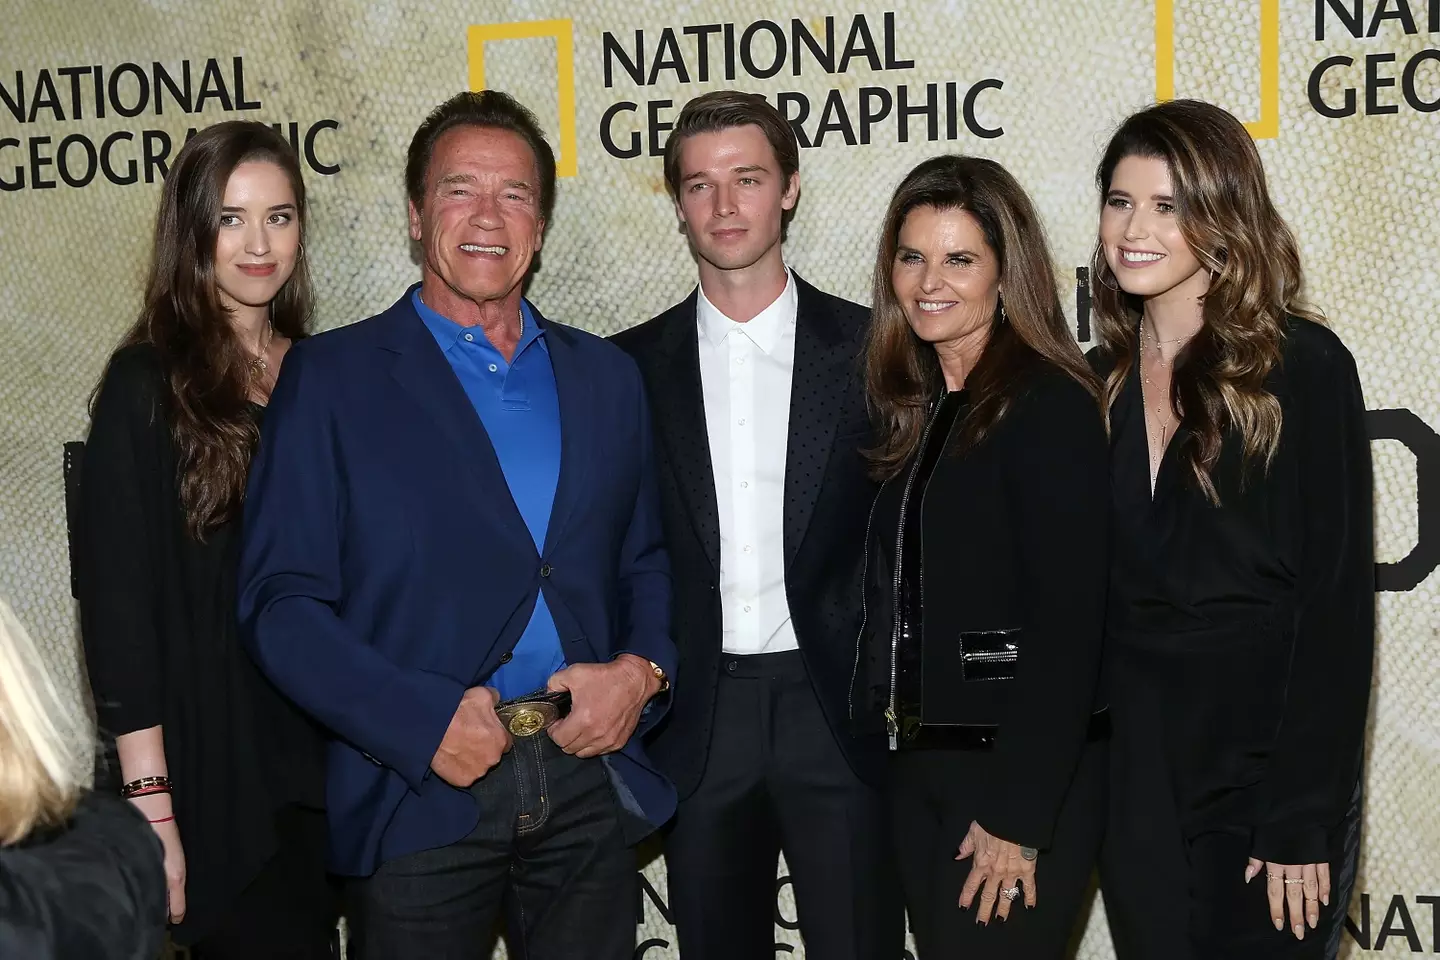 Arnold Schwarzenegger and Maria Shriver share four children together.